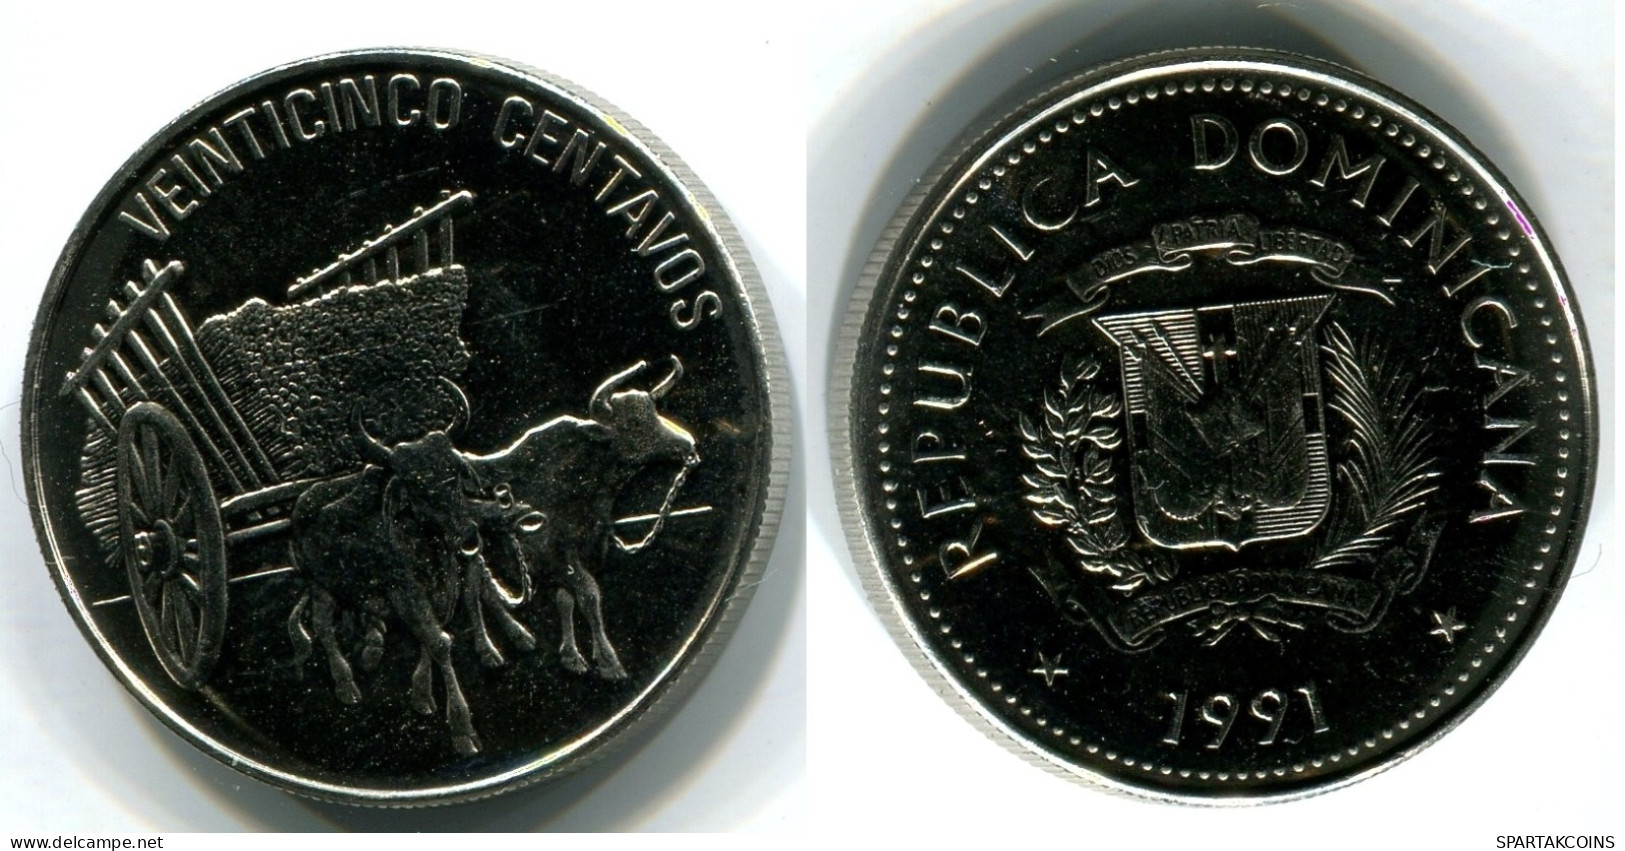 25 CENTAVOS 1991 REPUBLICA DOMINICANA UNC Coin #W10800.U.A - Dominikanische Rep.